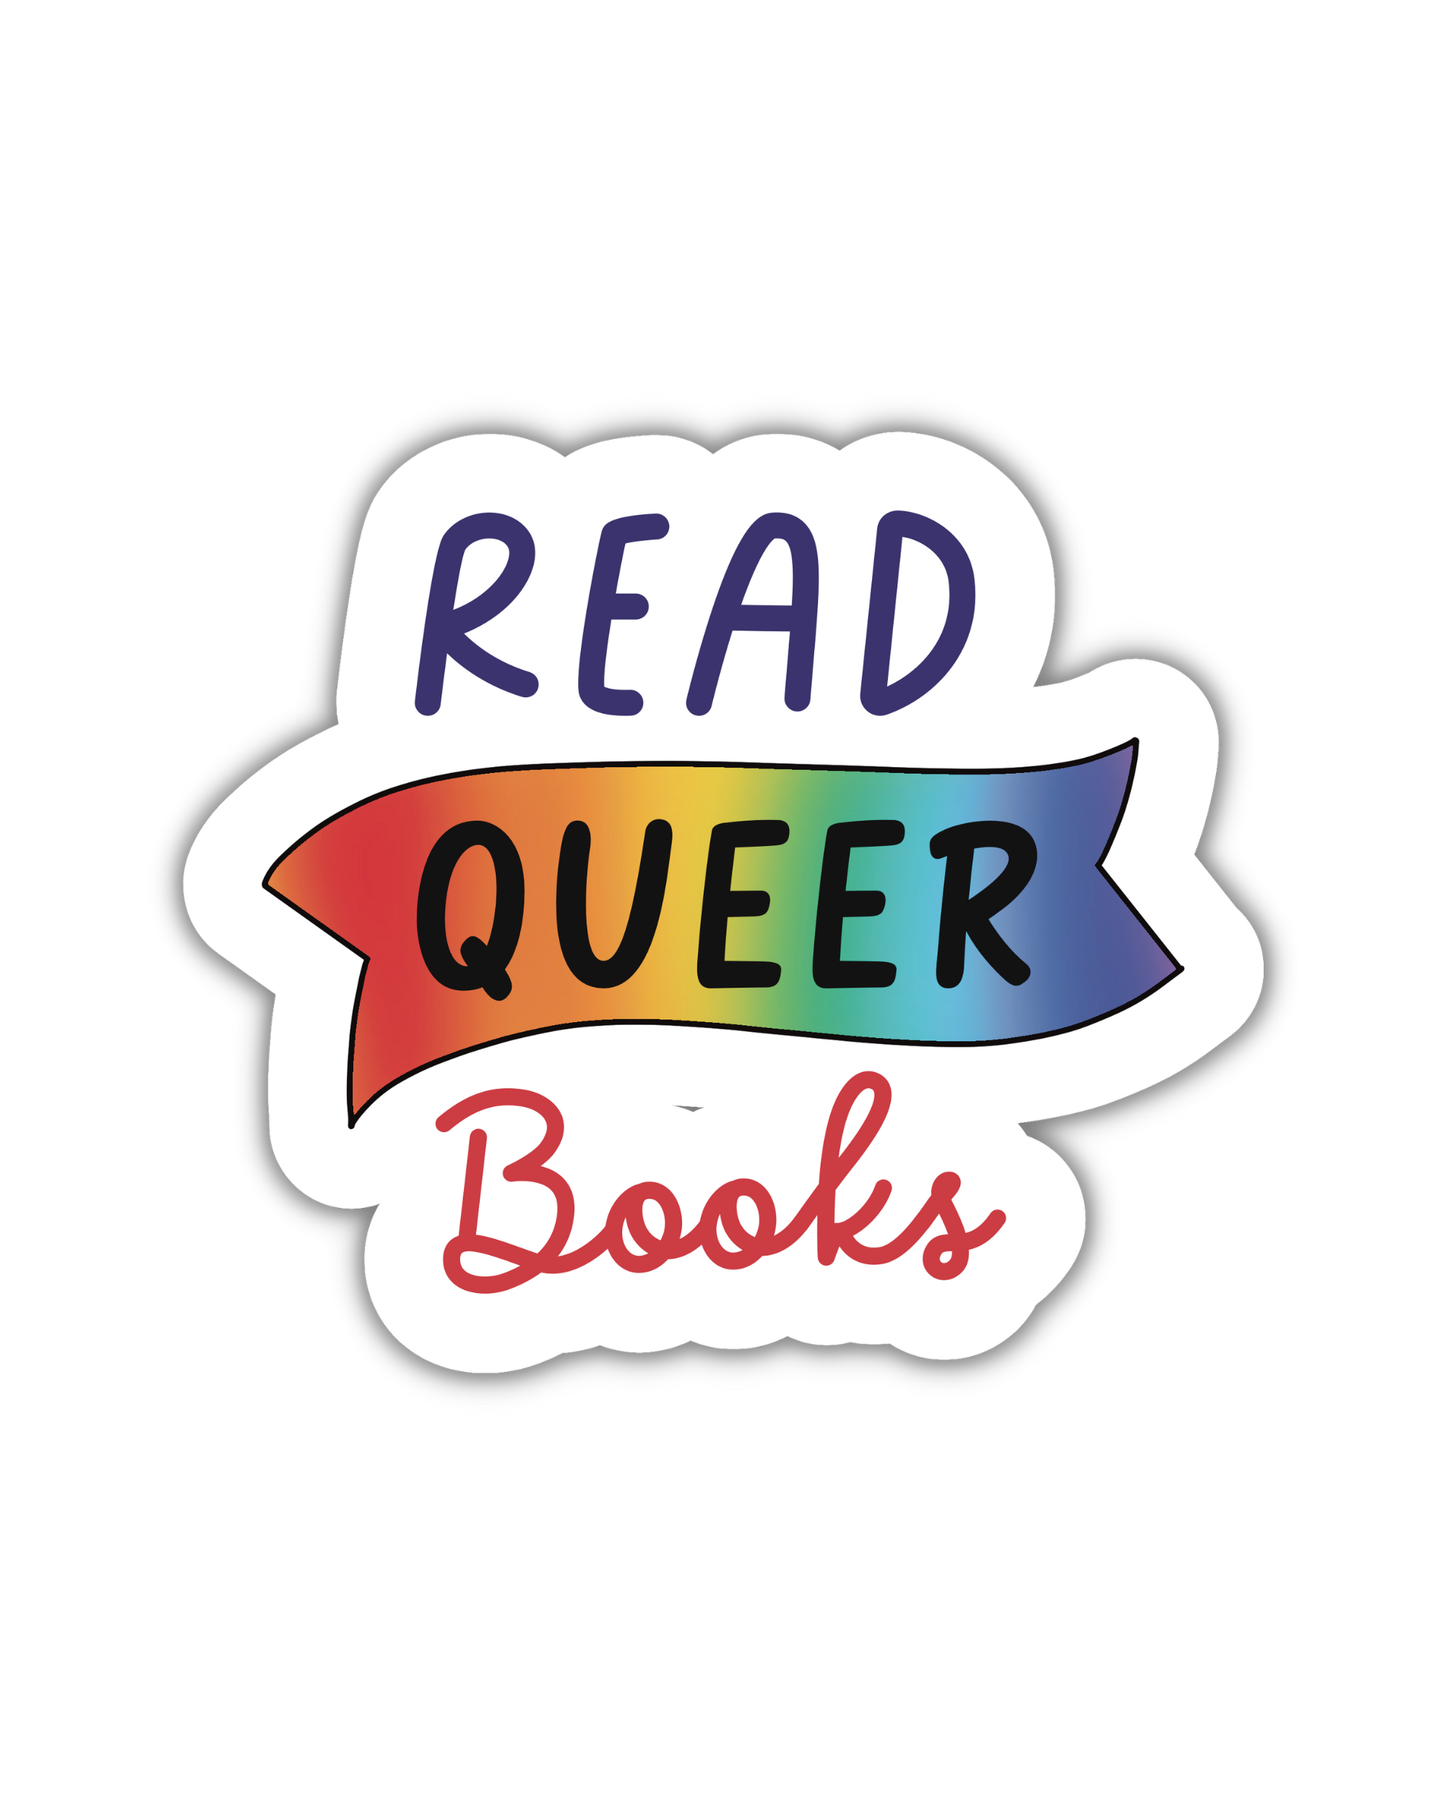 Read queer books vinyl sticker